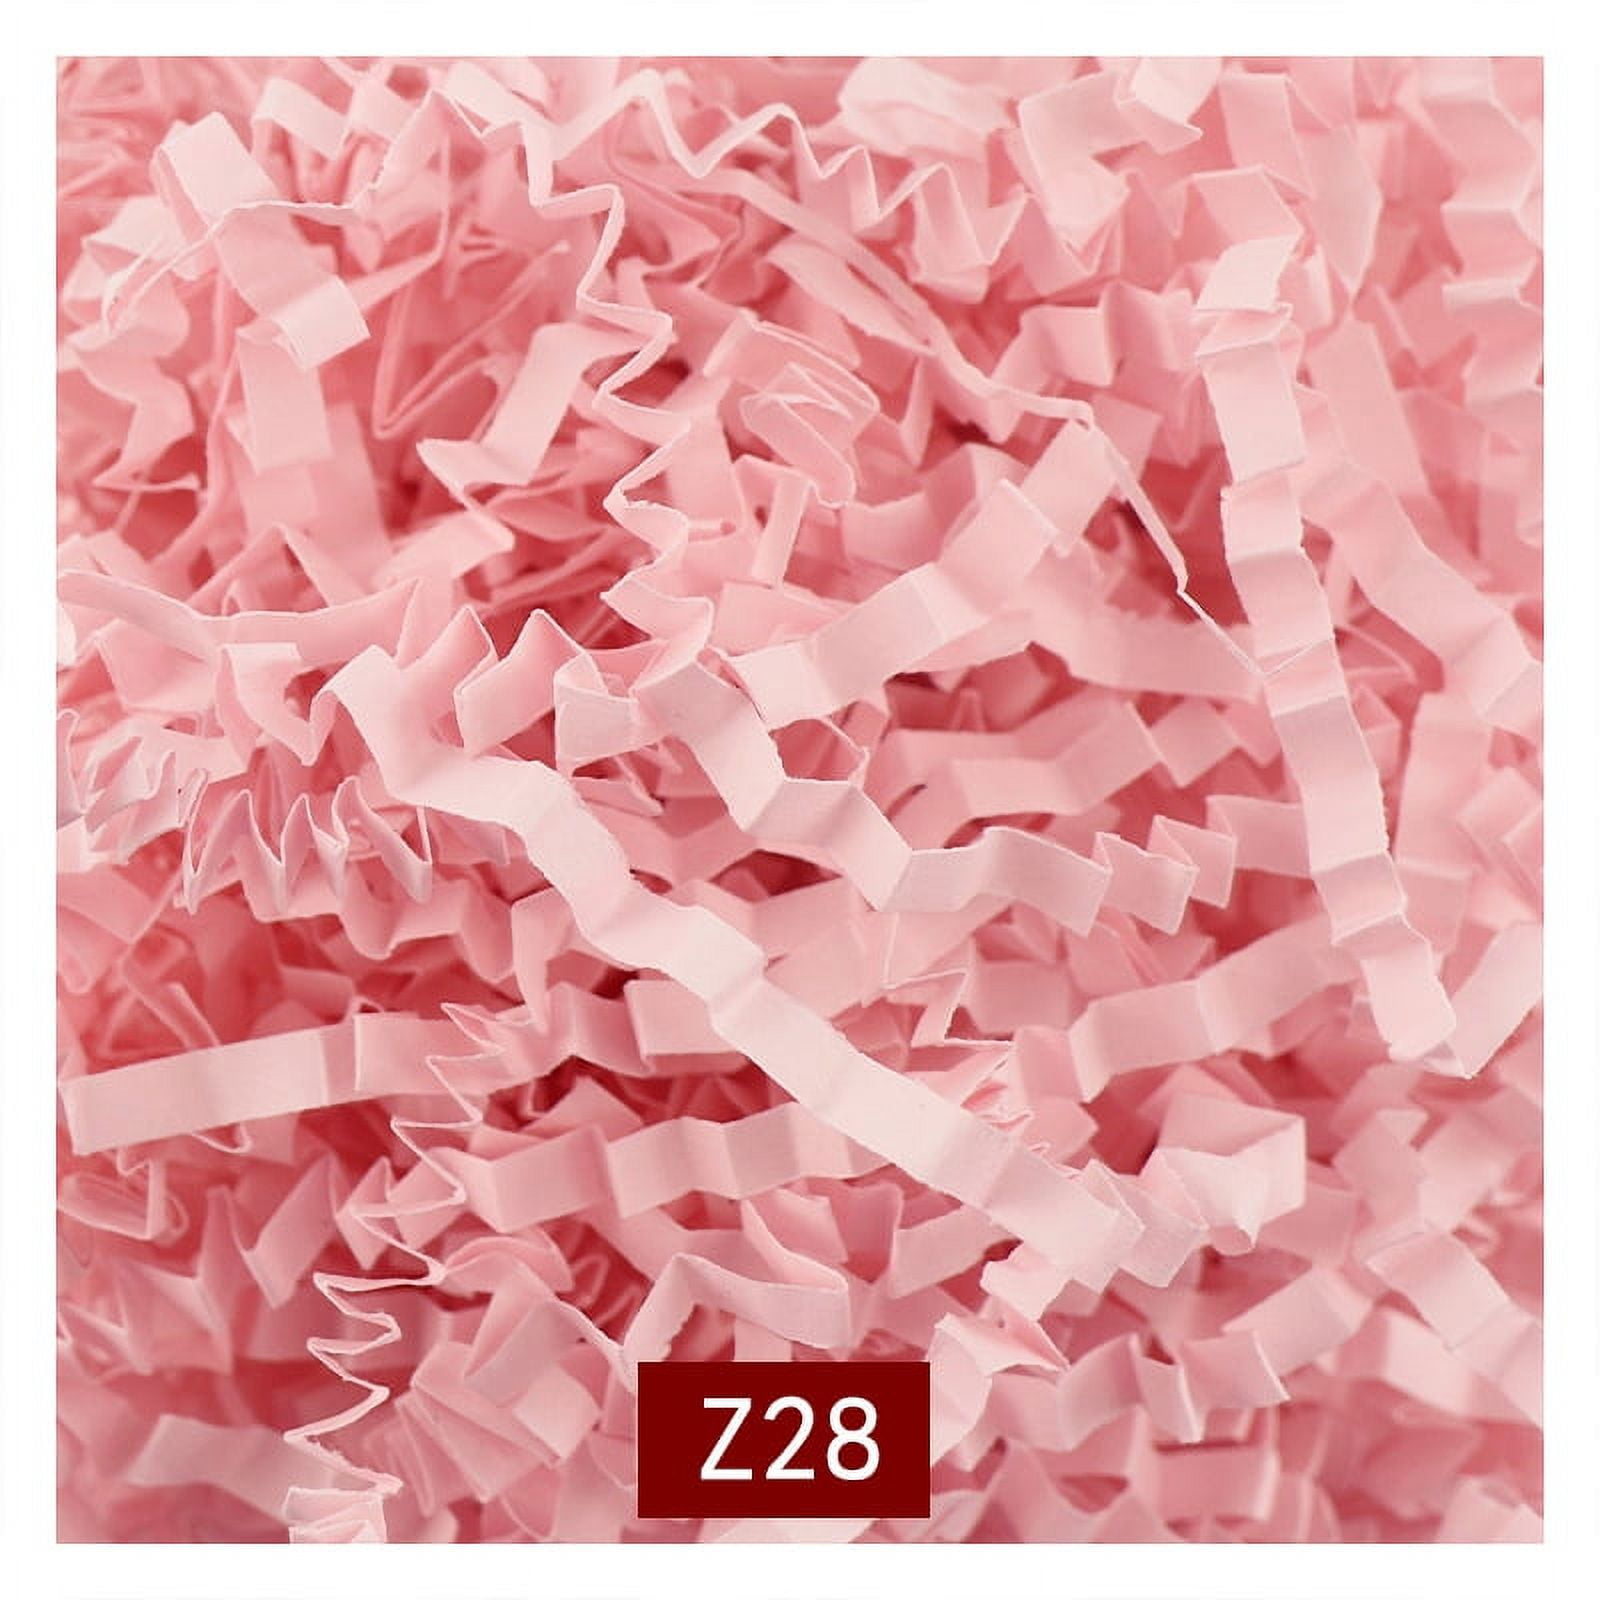 200g Colorful Shredded Paper Gift Box Filler Wedding Birthday